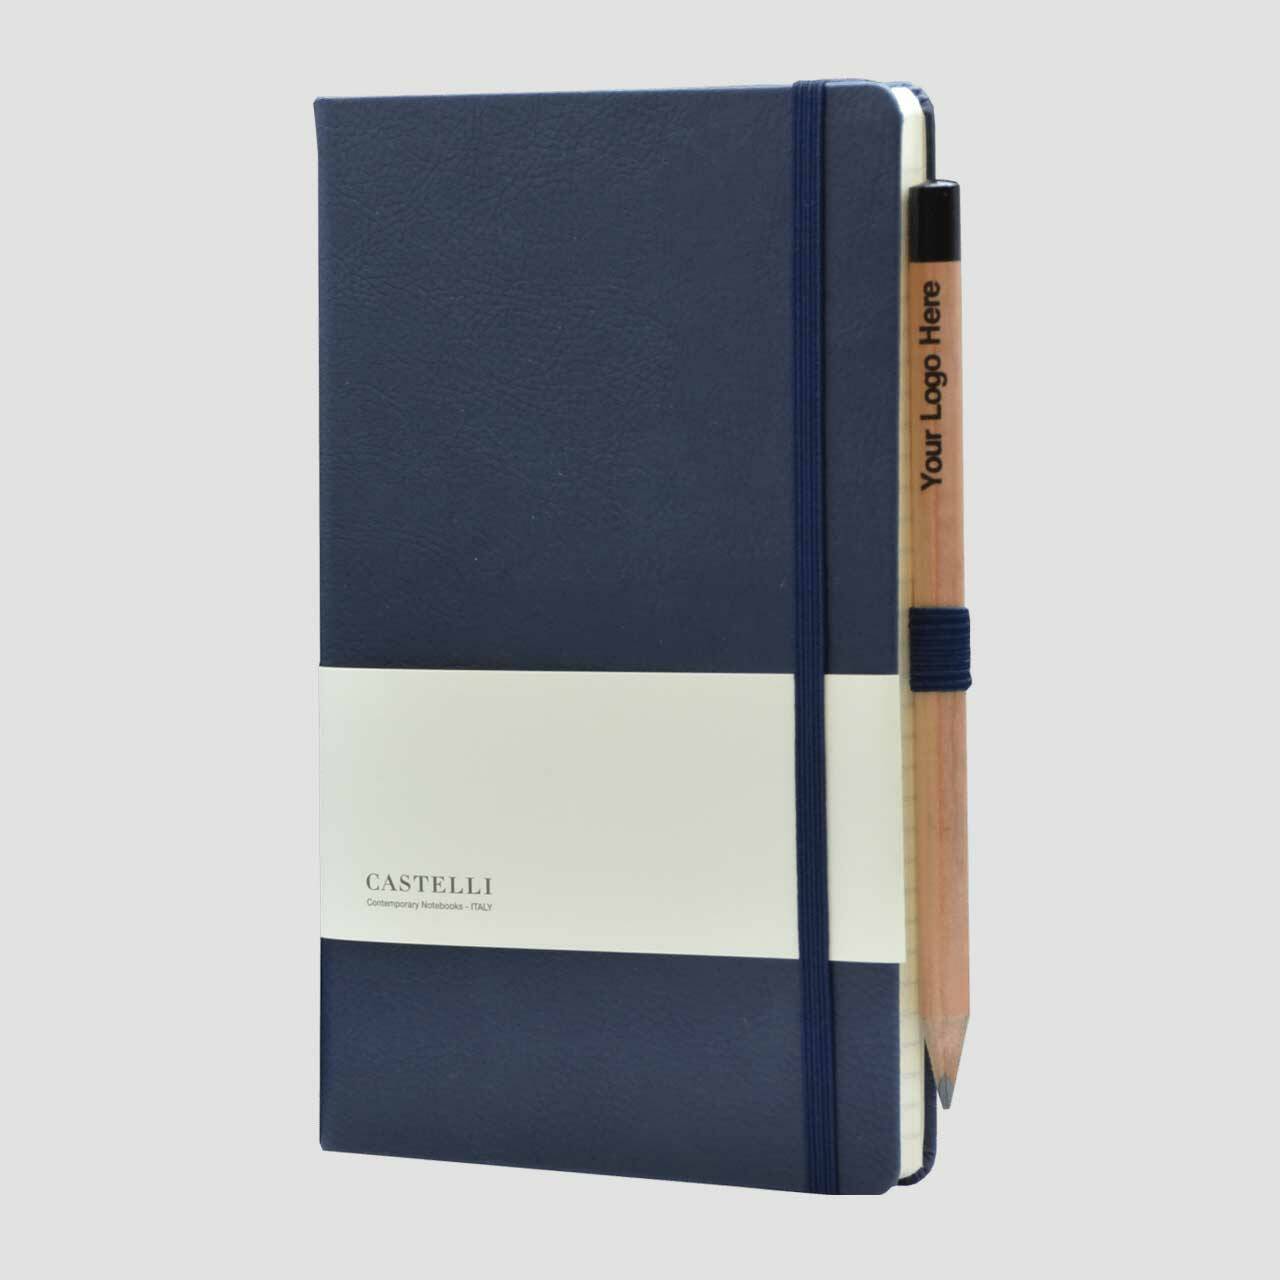 Castelli notitieboek lederlook met banderol en potlood met houder, blauw